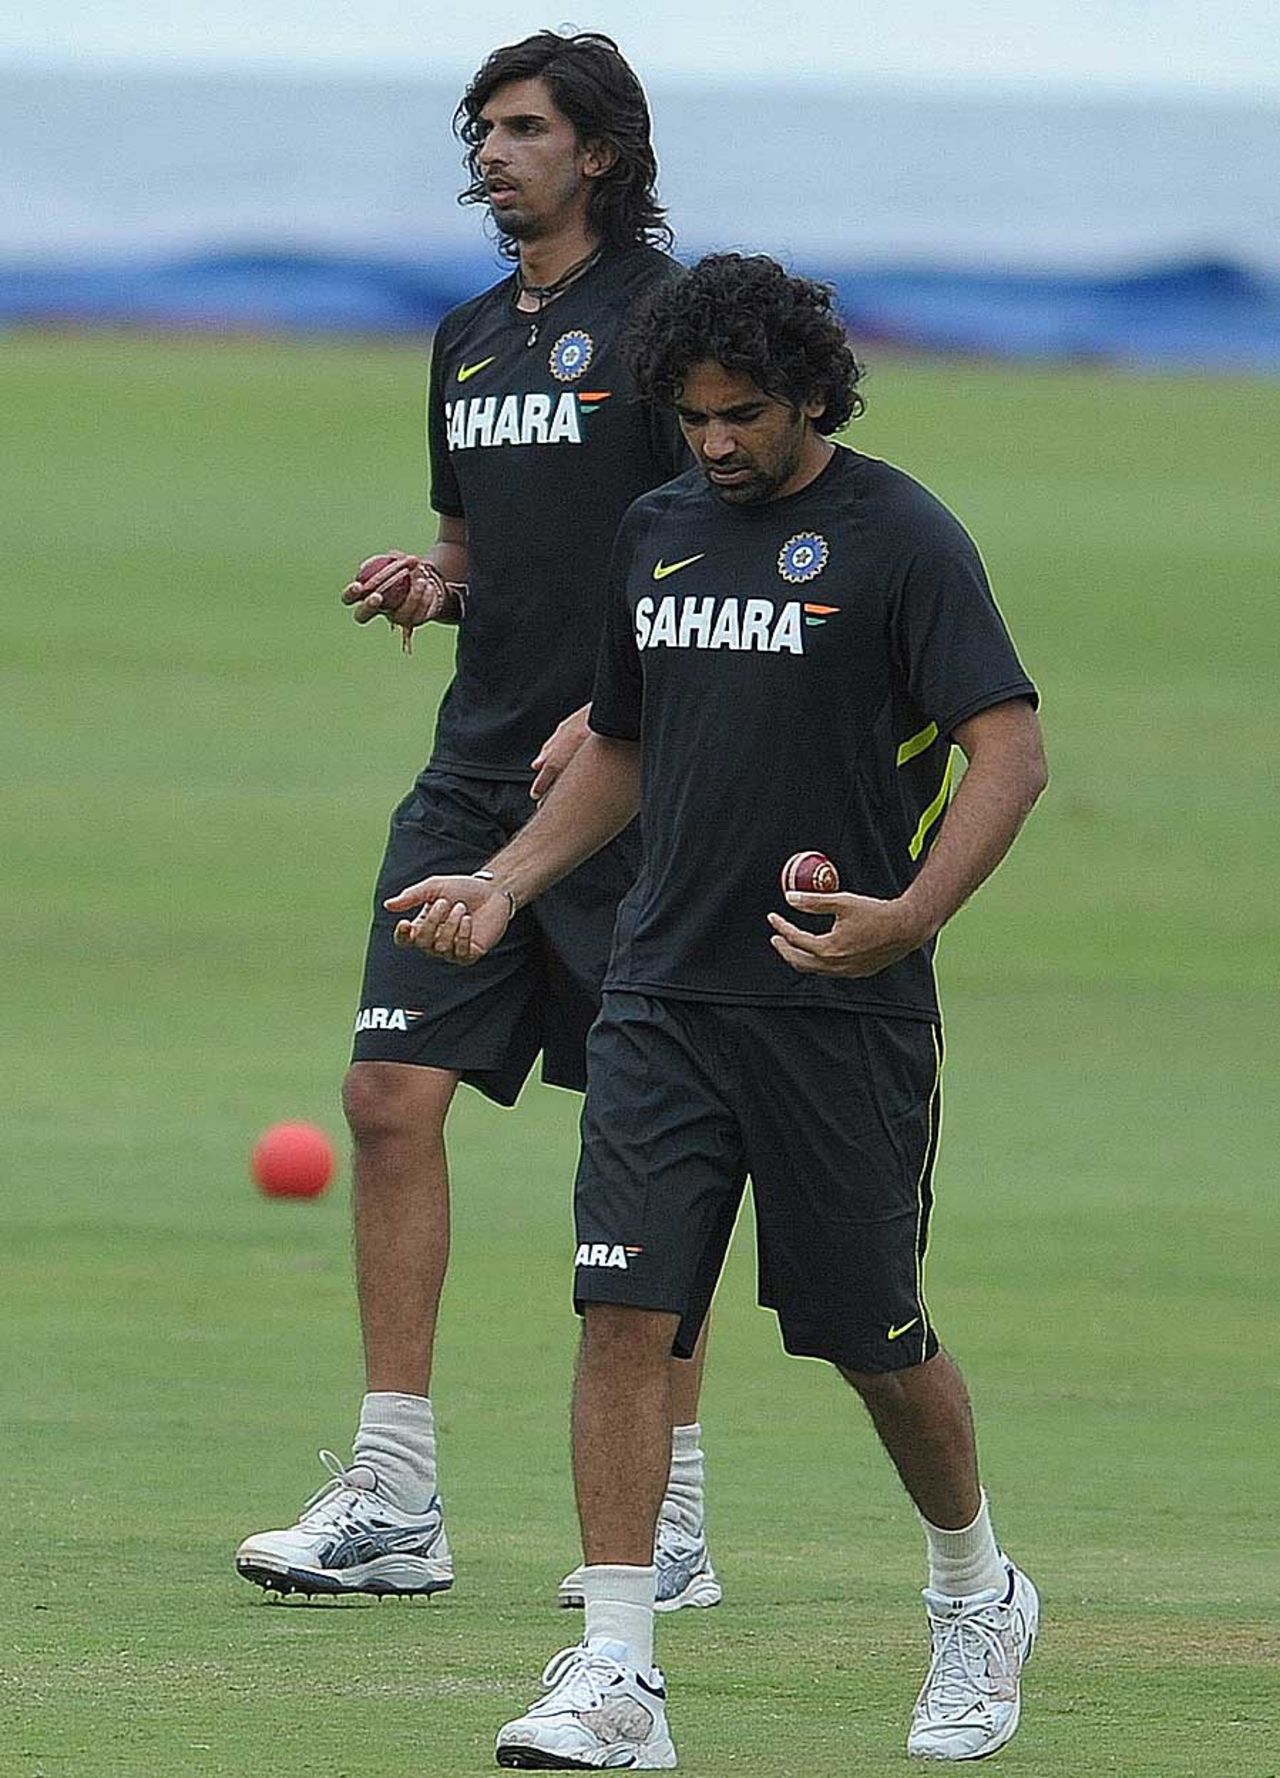 Ishant Sharma and Zaheer Khan at the nets, Hyderabad, August 21, 2012